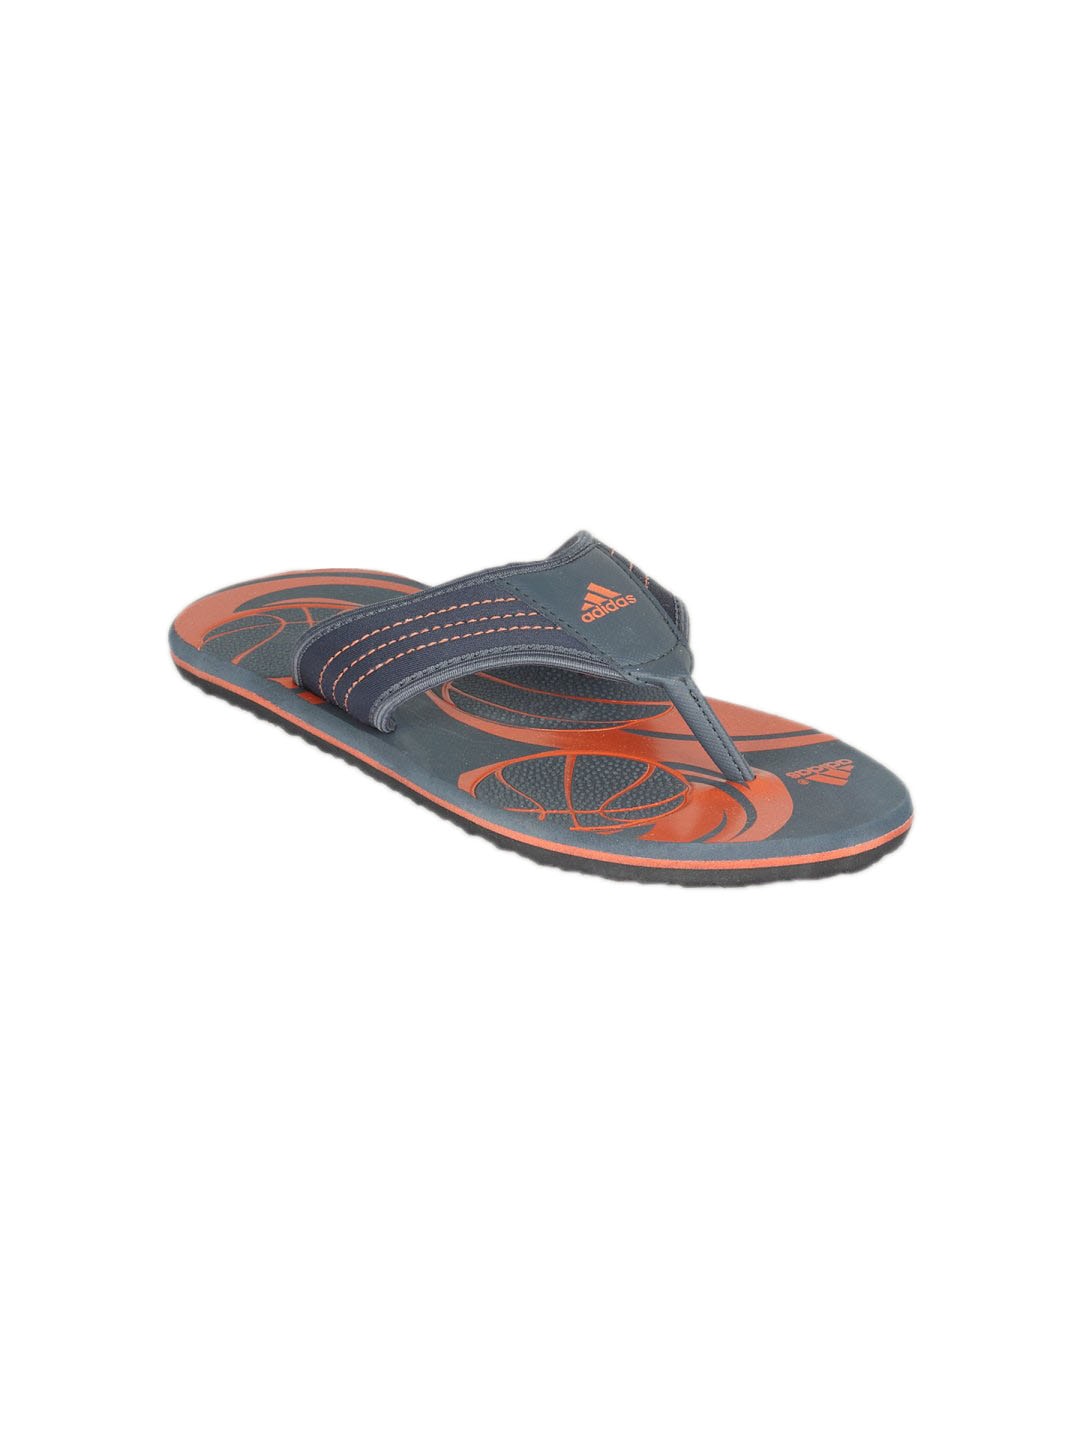 ADIDAS Men's Slide Grey Orange Flip Flop